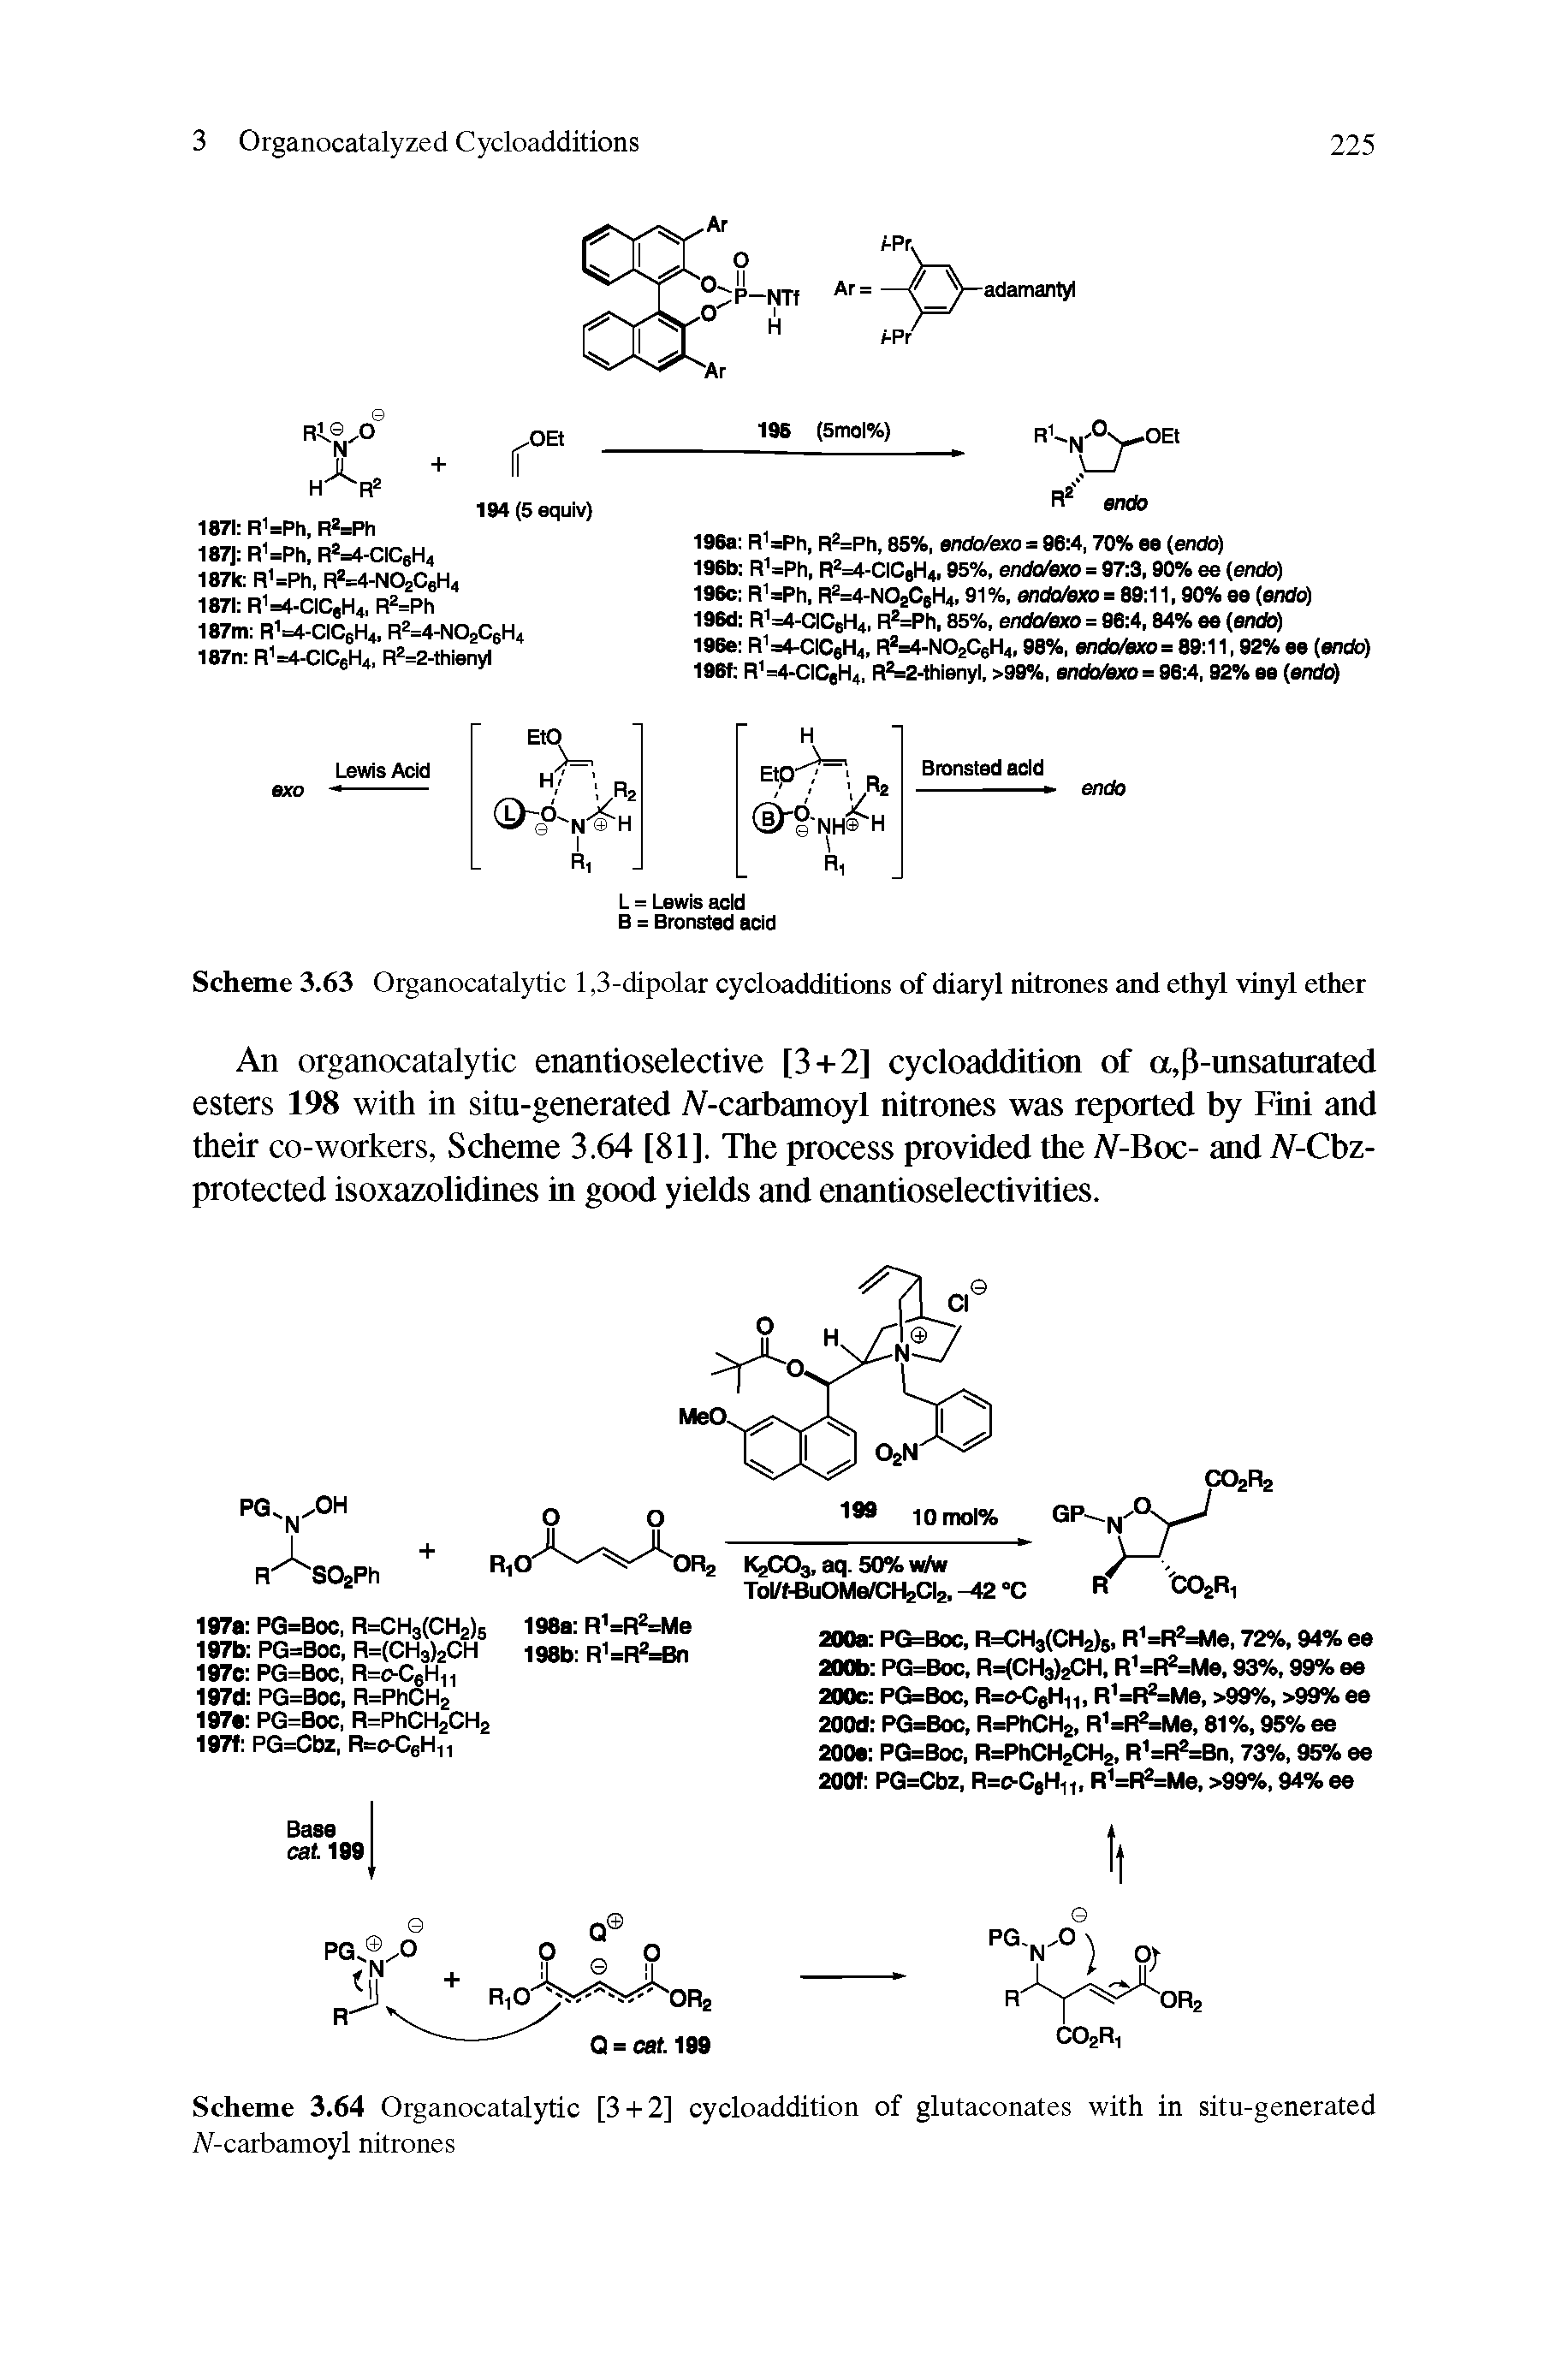 Scheme 3.63 Organocatalytic 1,3-dipolar cycloadditions of diaryl nitrones and ethyl vinyl ether...